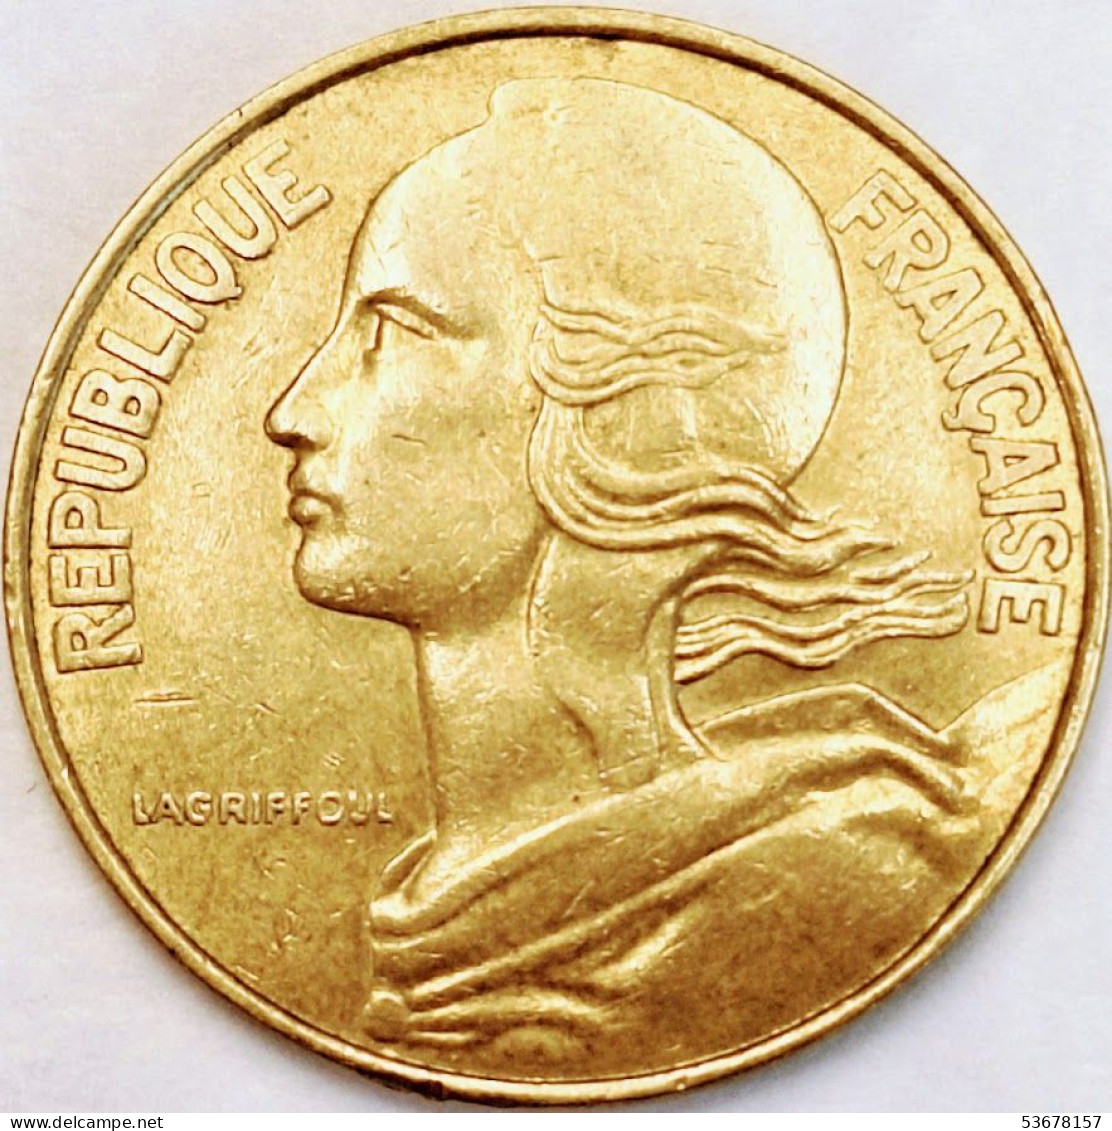 France - 20 Centimes 1985, KM# 930 (#4271) - 20 Centimes